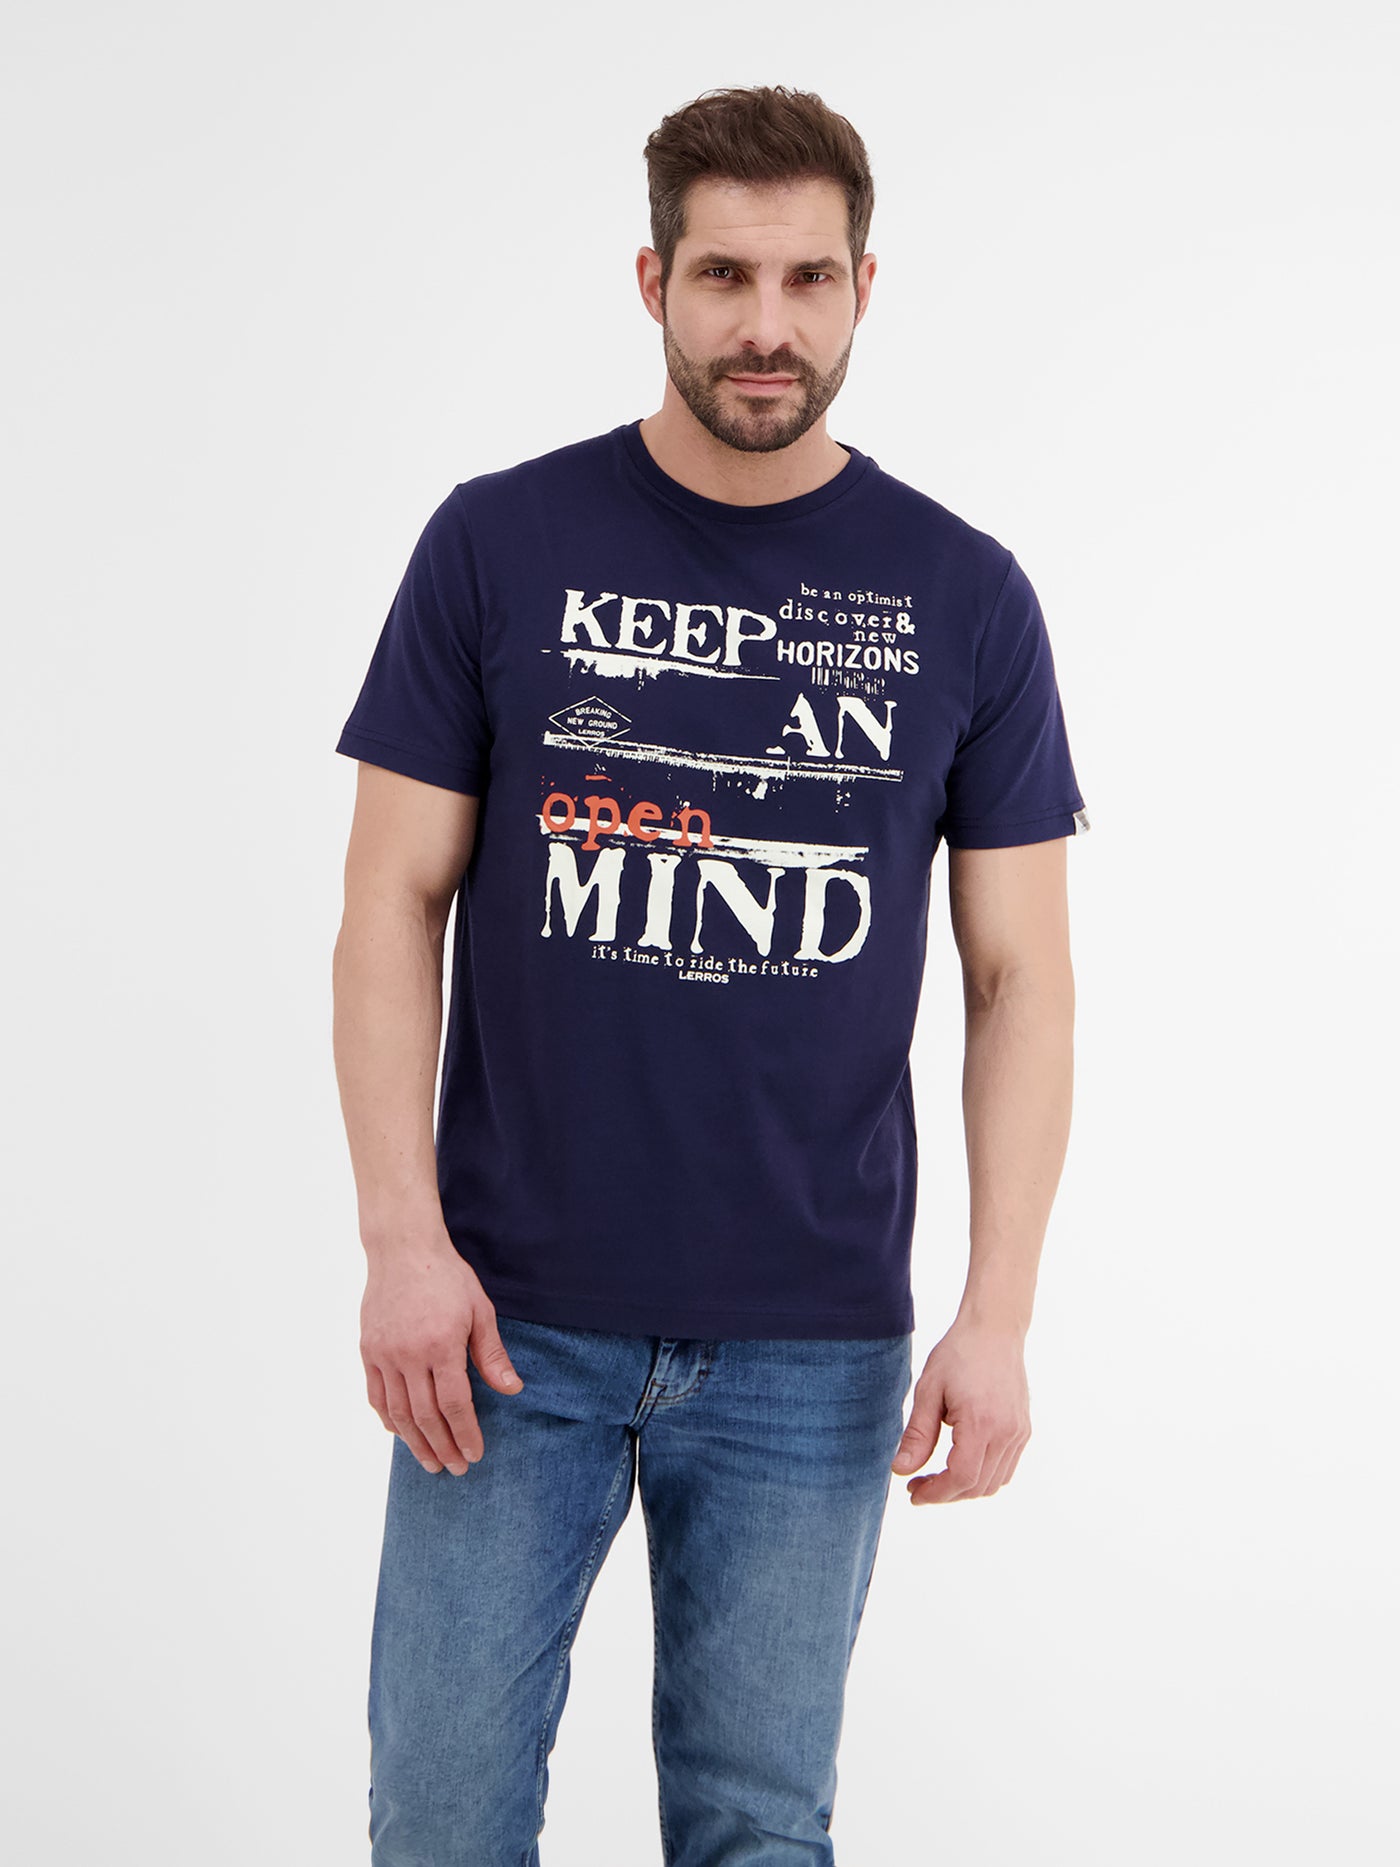 T-shirt with front print – SHOP LERROS